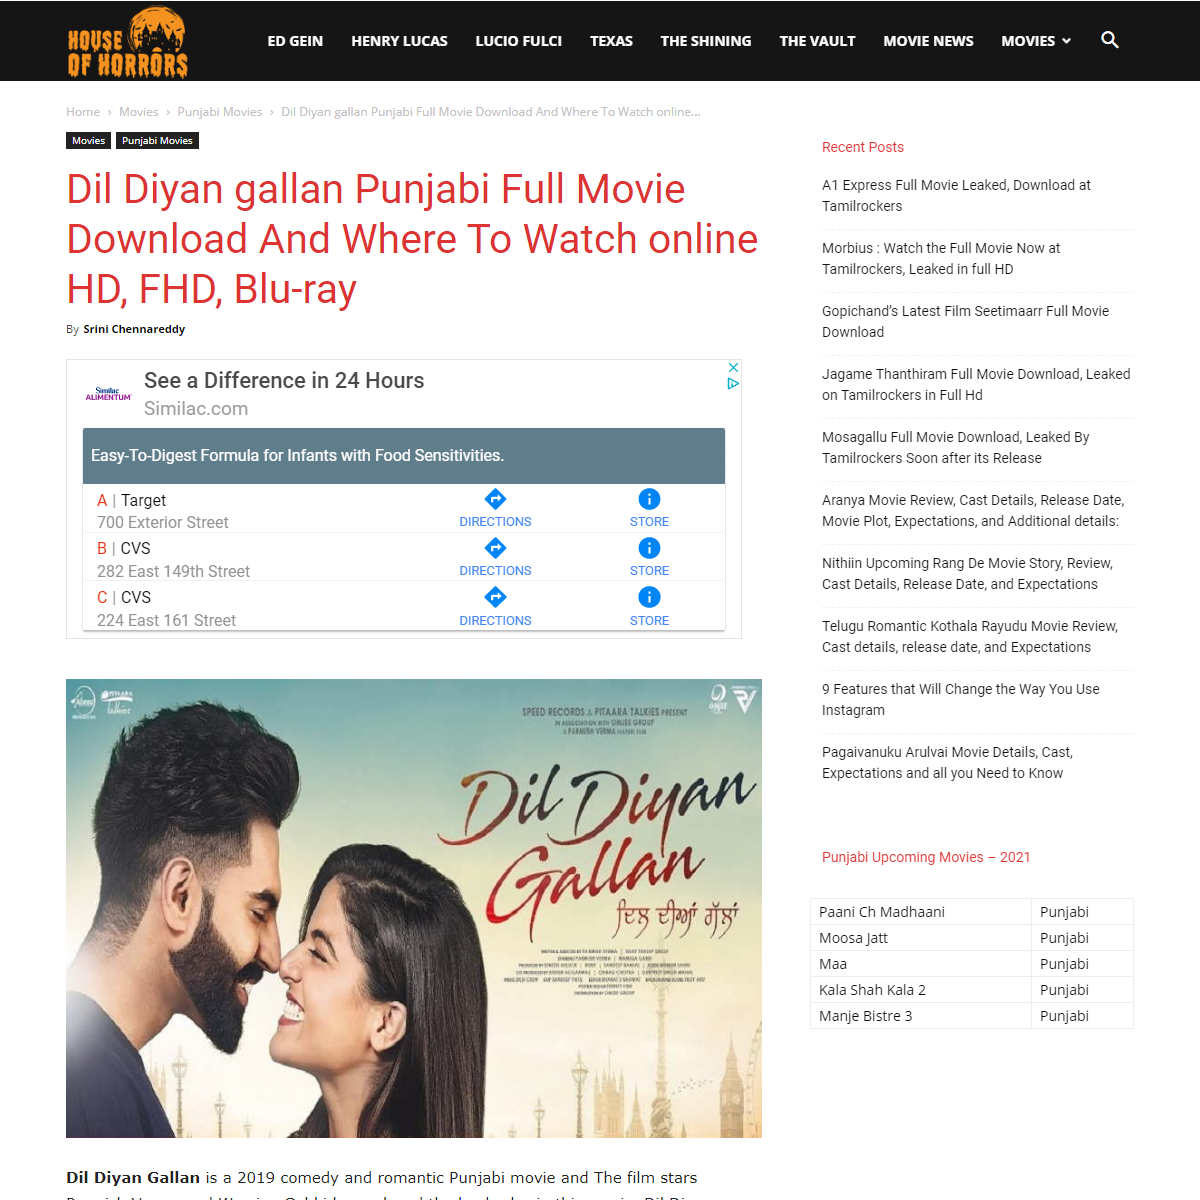 Dil Diyan gallan Full Movie Download online HD, FHD, Blu-ray